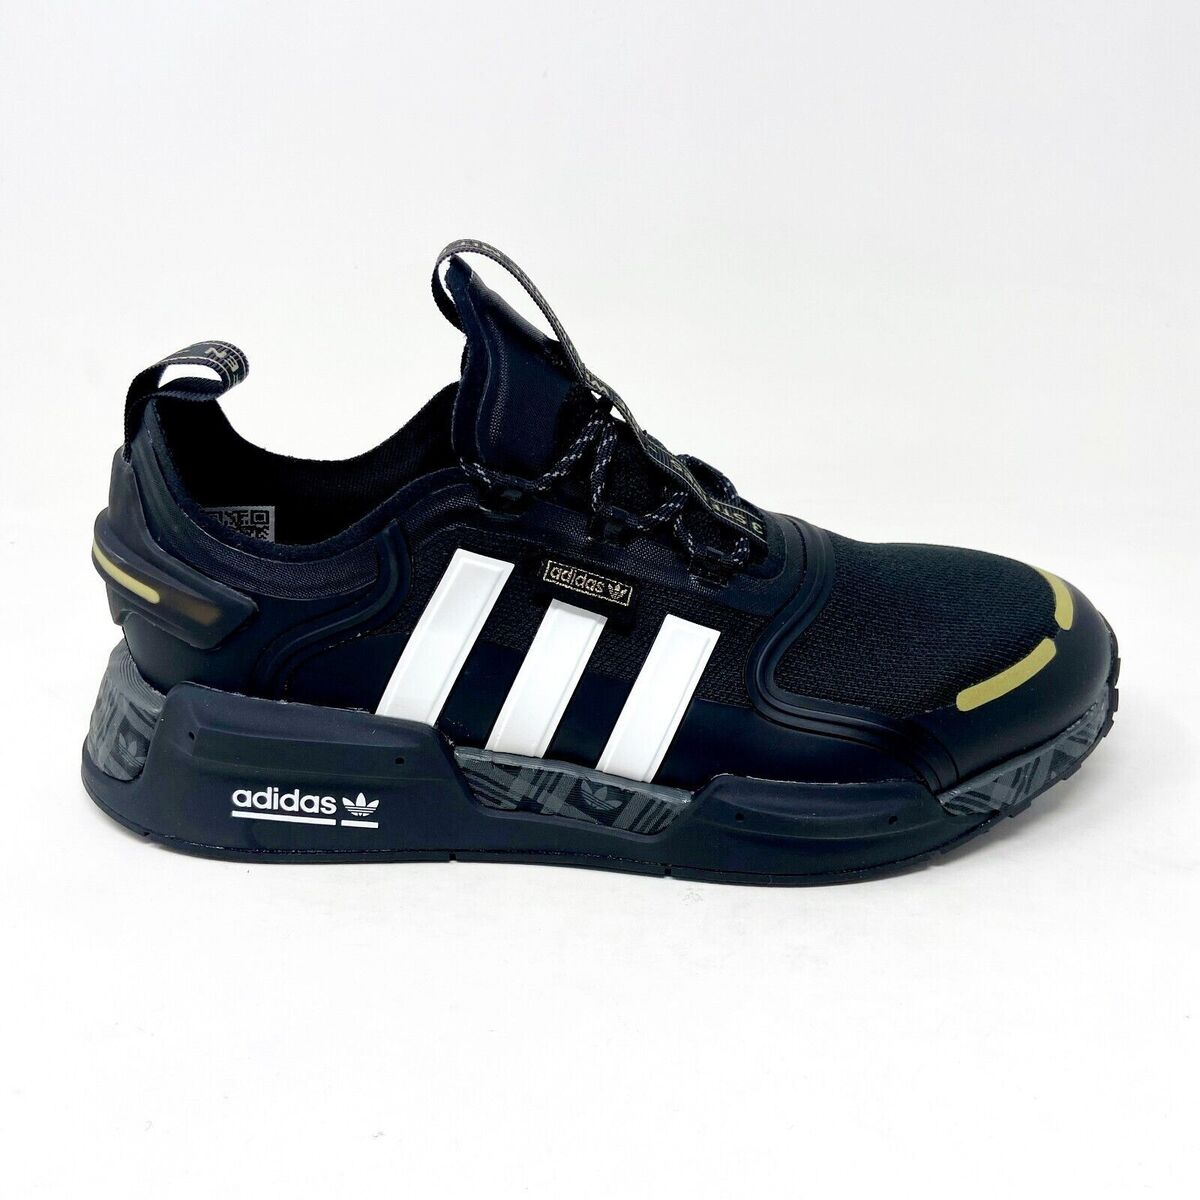 NWT Adidas Originals NMD V3 Black White Running Sneakers ID6713 | eBay